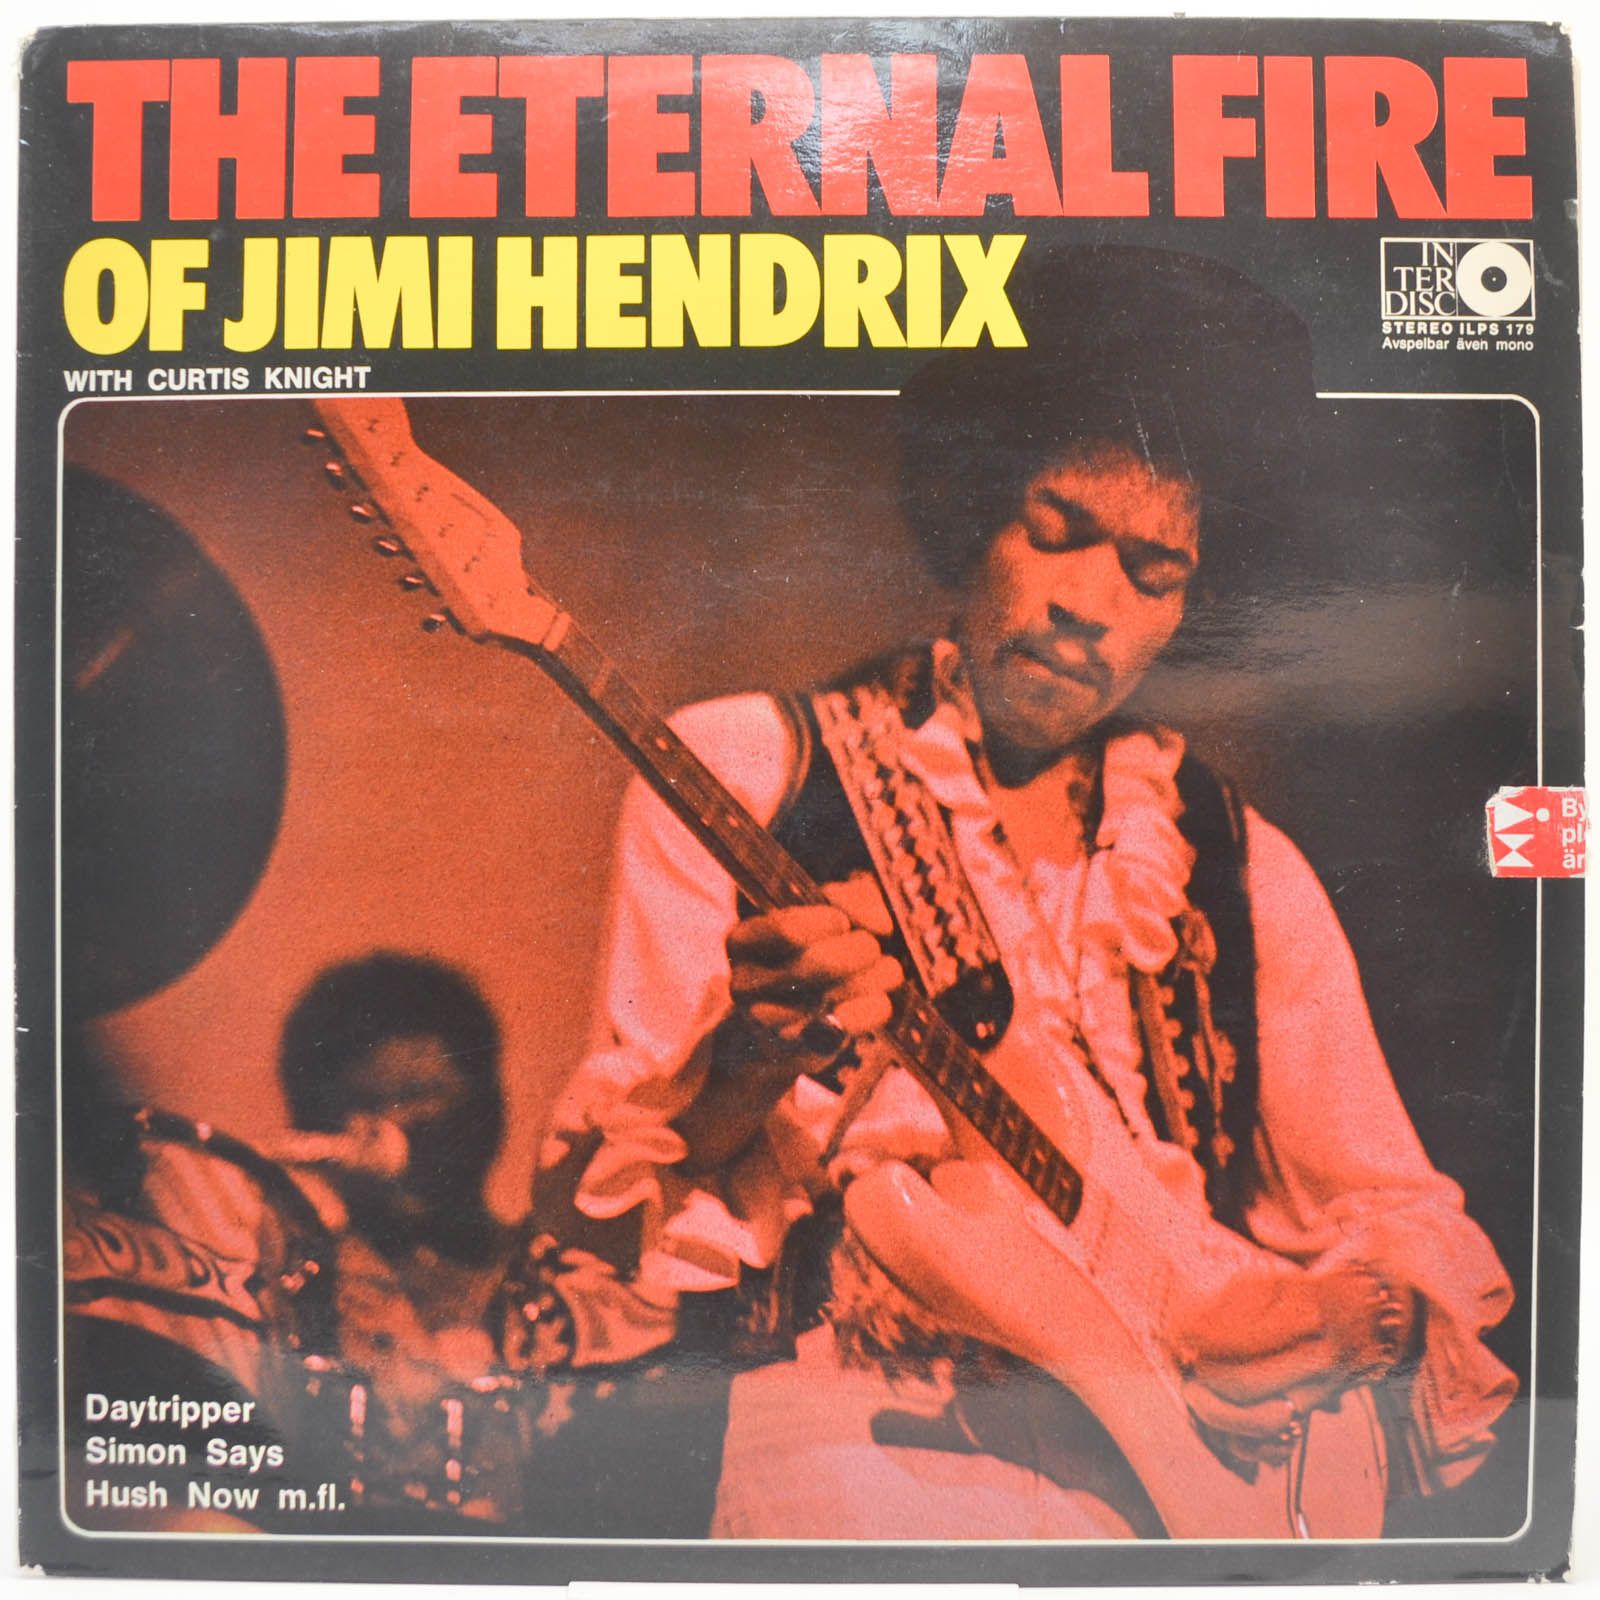 Jimi Hendrix With Curtis Knight — The Eternal Fire Of Jimi Hendrix, 1972